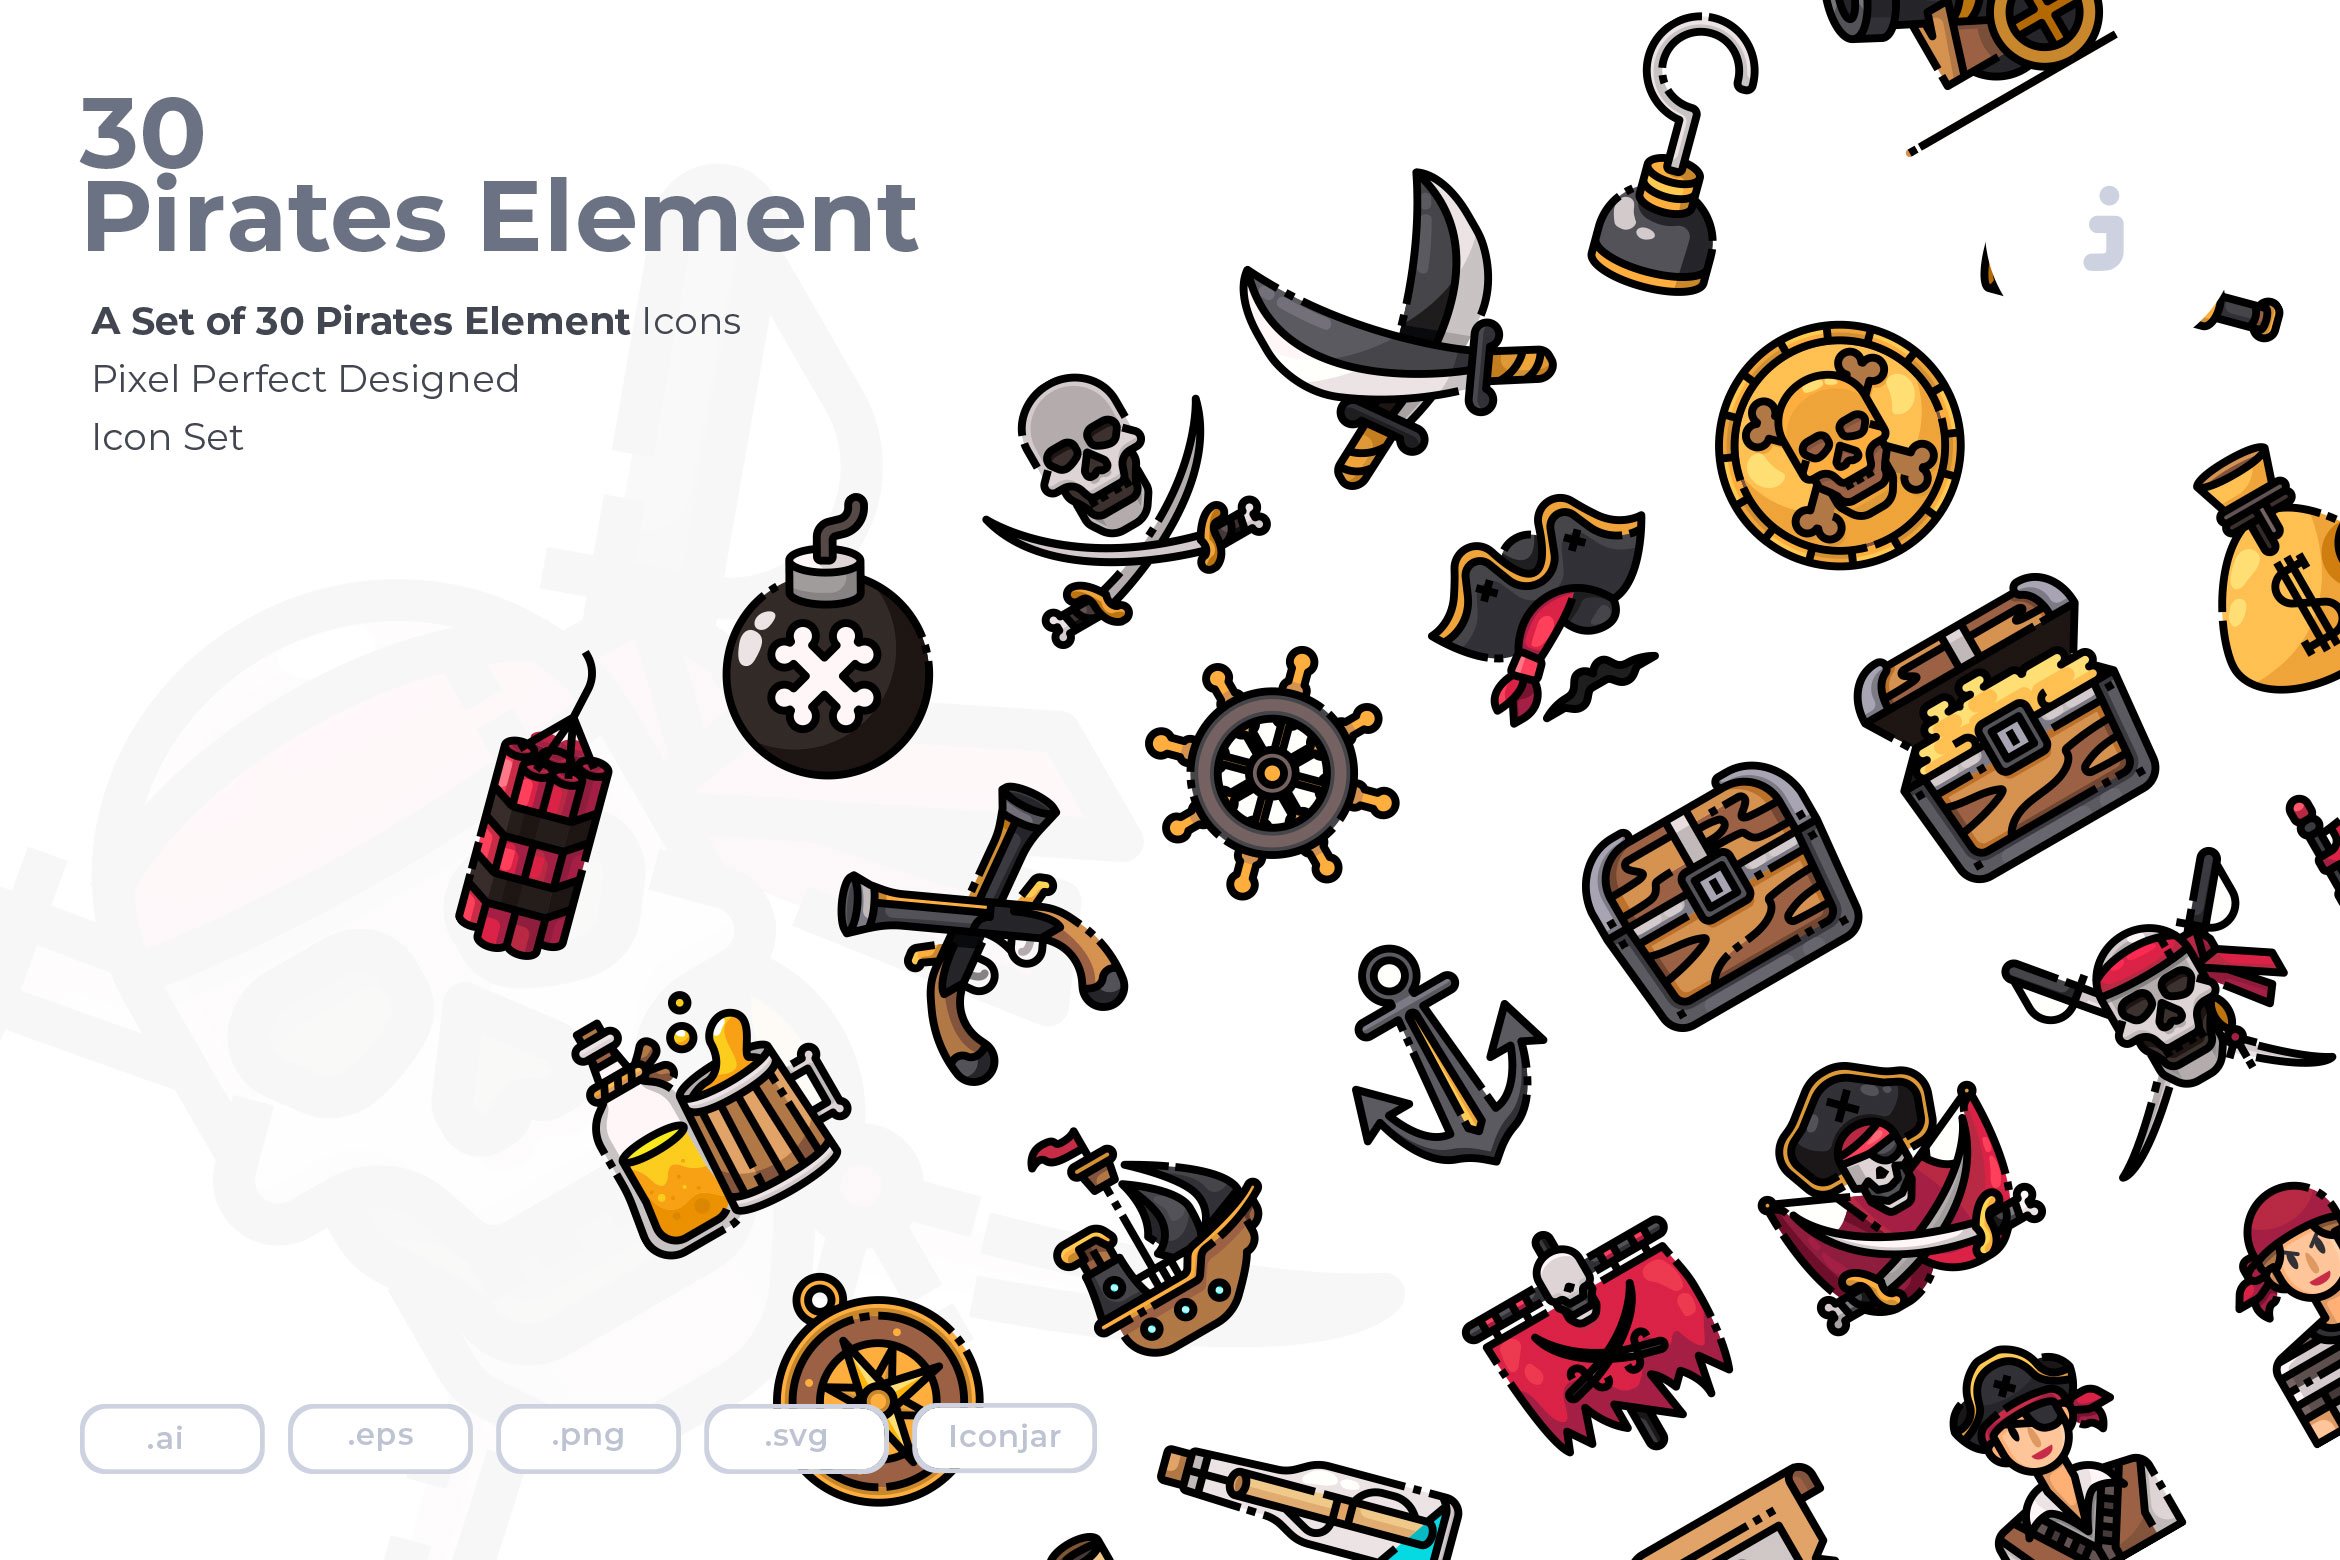 30 Pirates Element Icon set cover image.